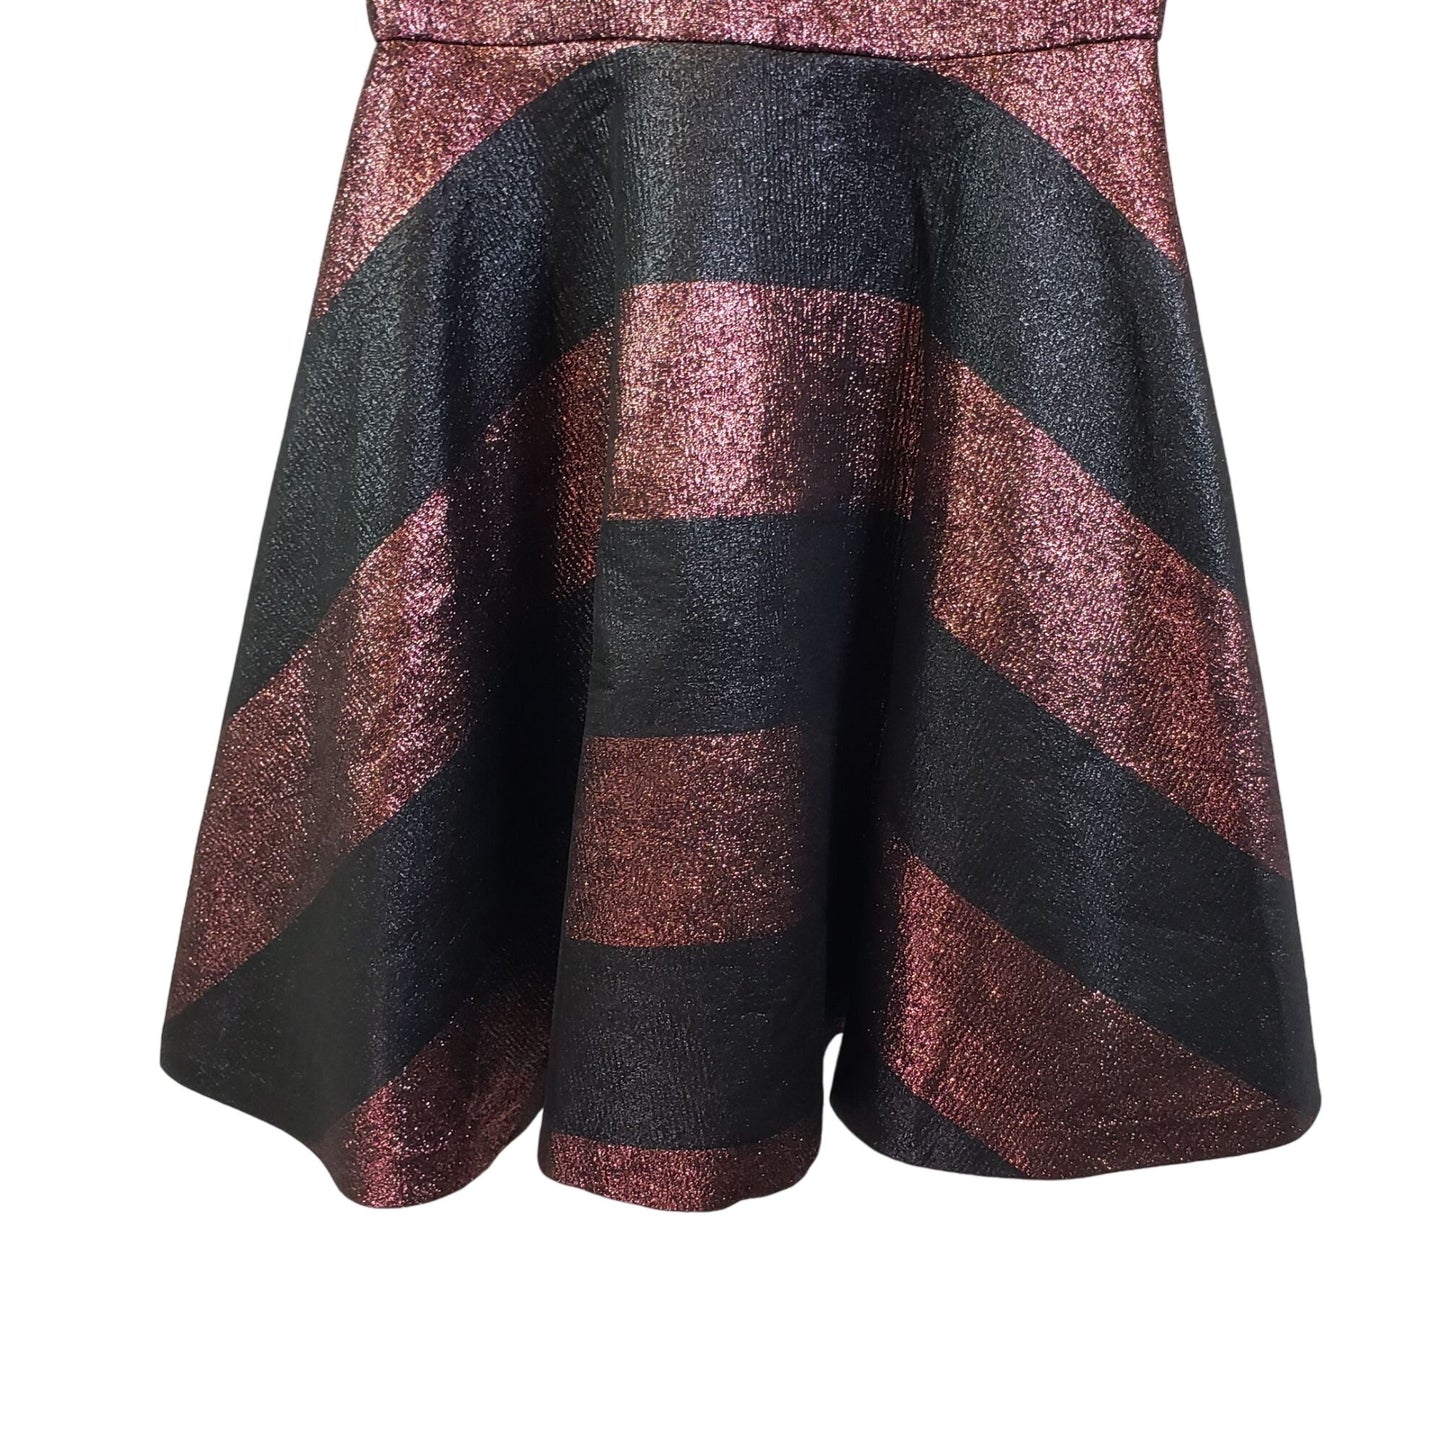 NWT Alice + Olivia Foss Wool Blend Metallic Cutout Dress Size 8